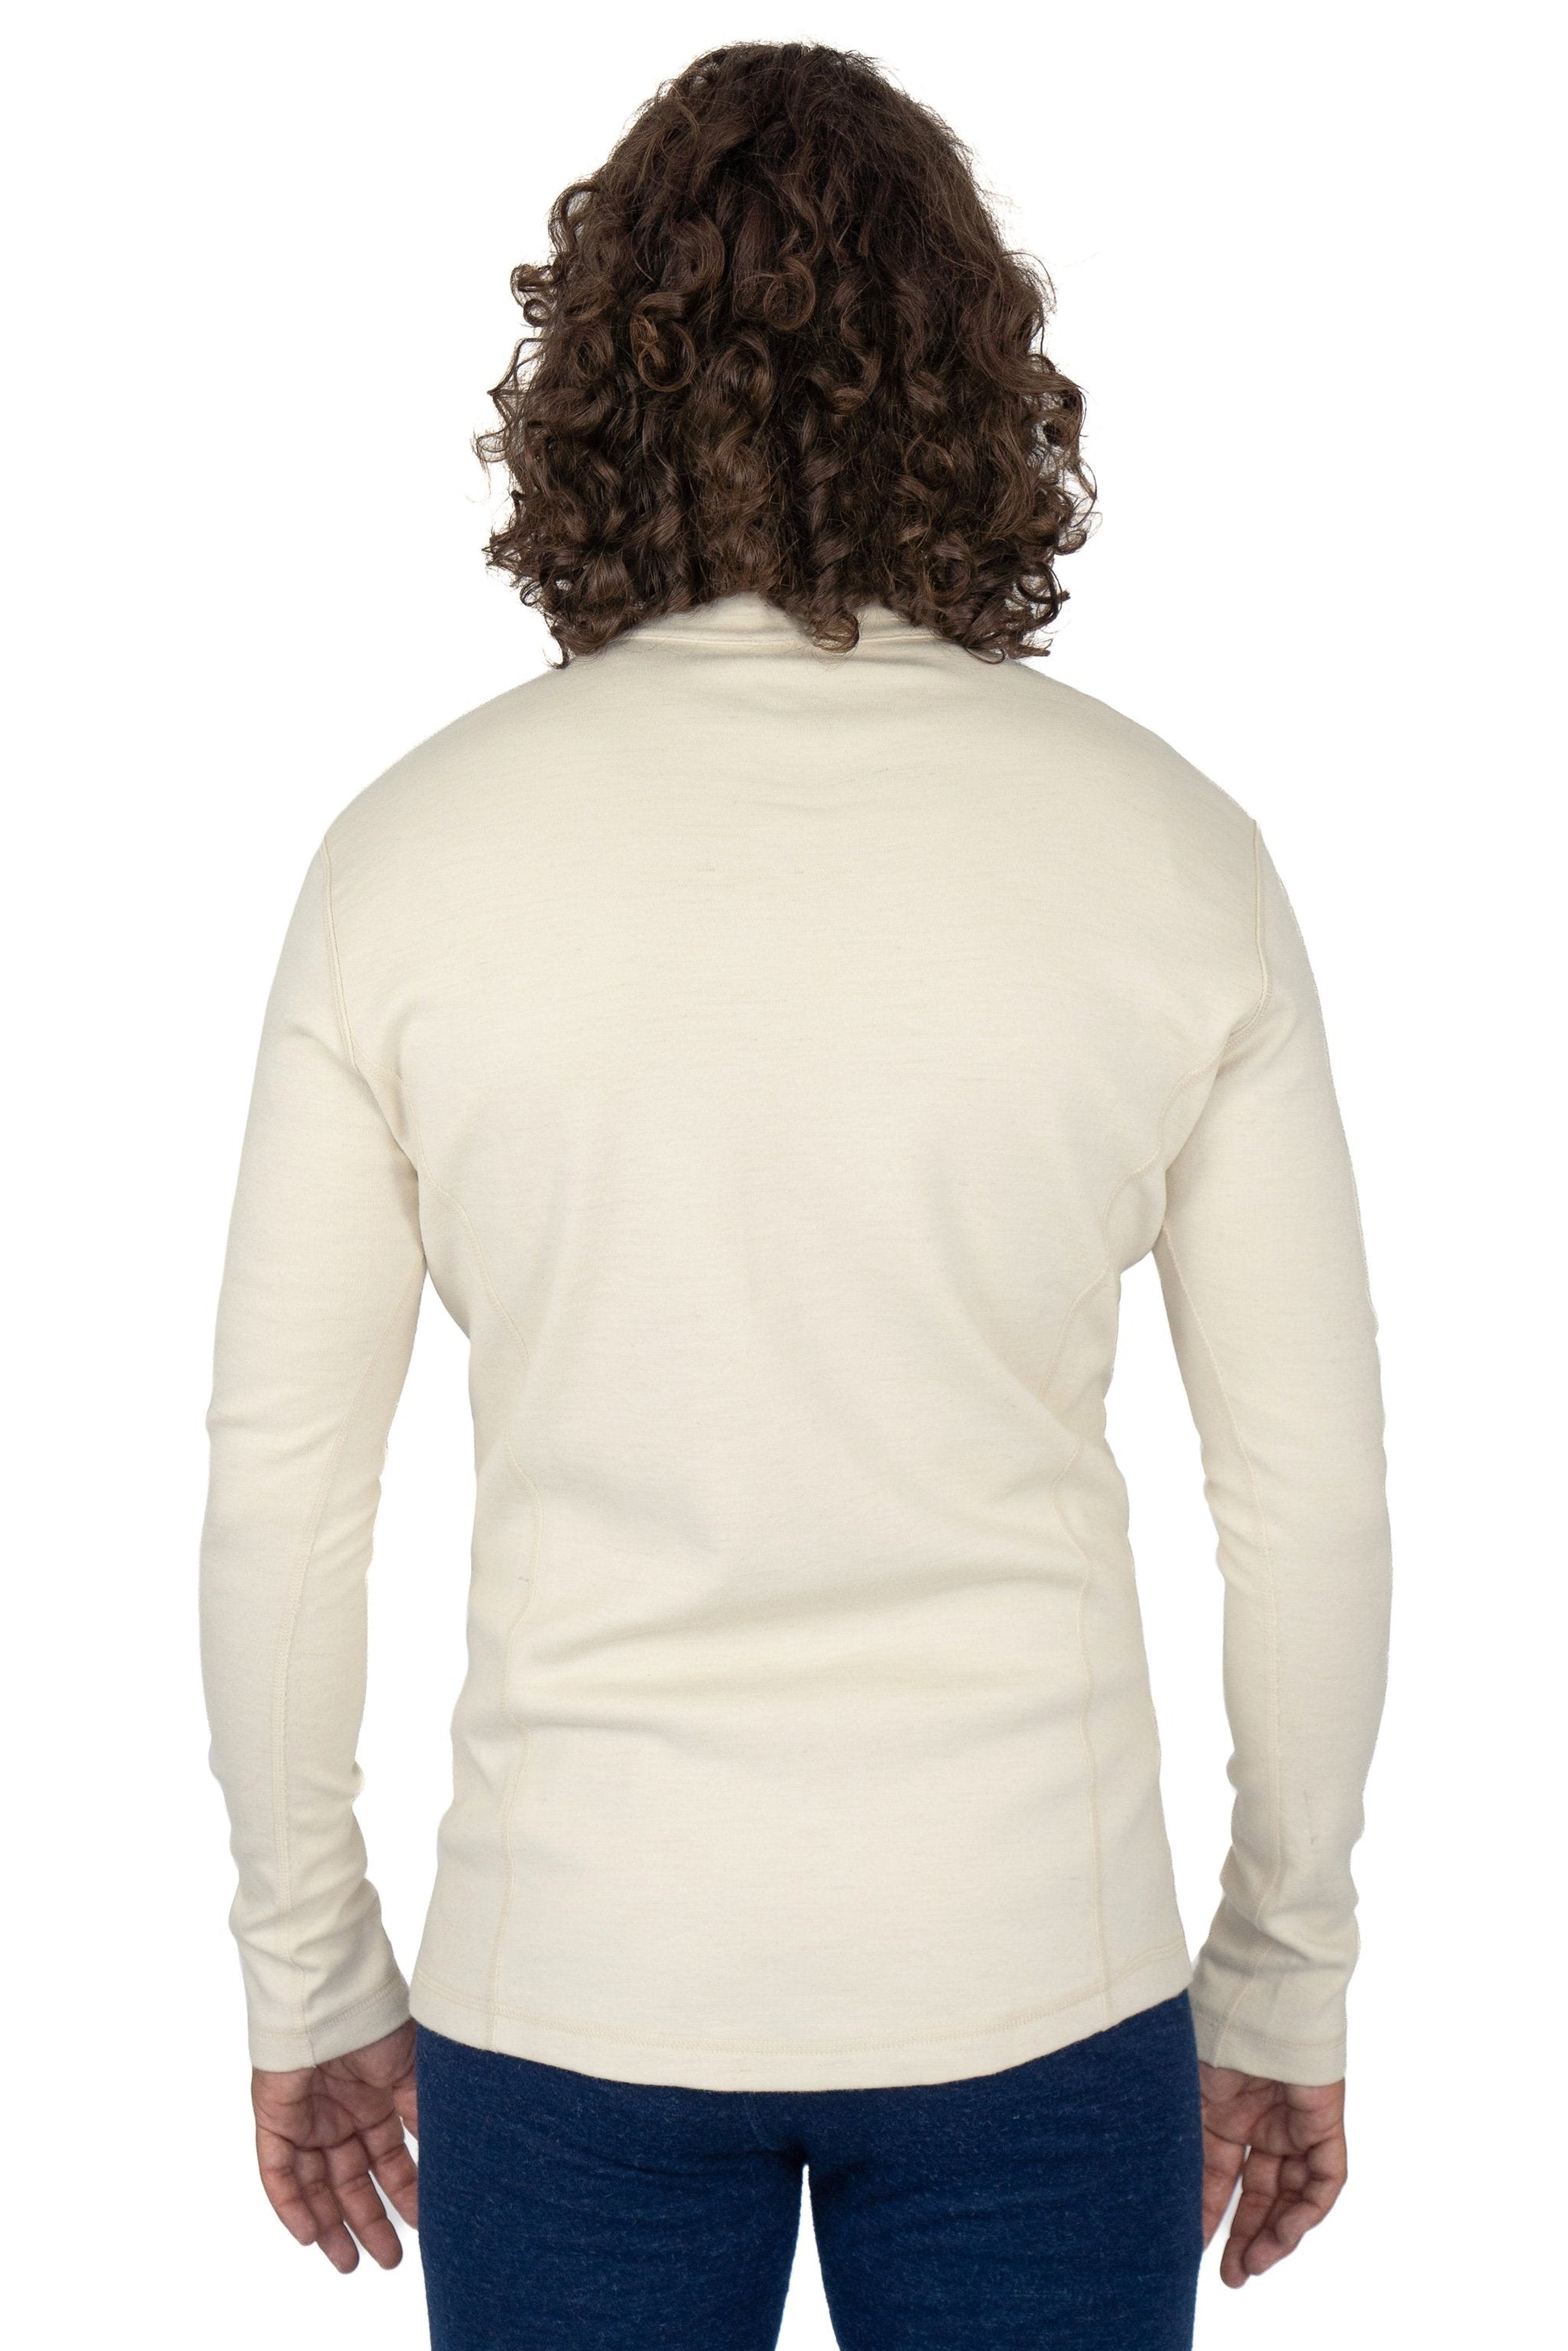 Men's Alpaca Wool Jacket: 420 Midweight Full-Zip color Natural White